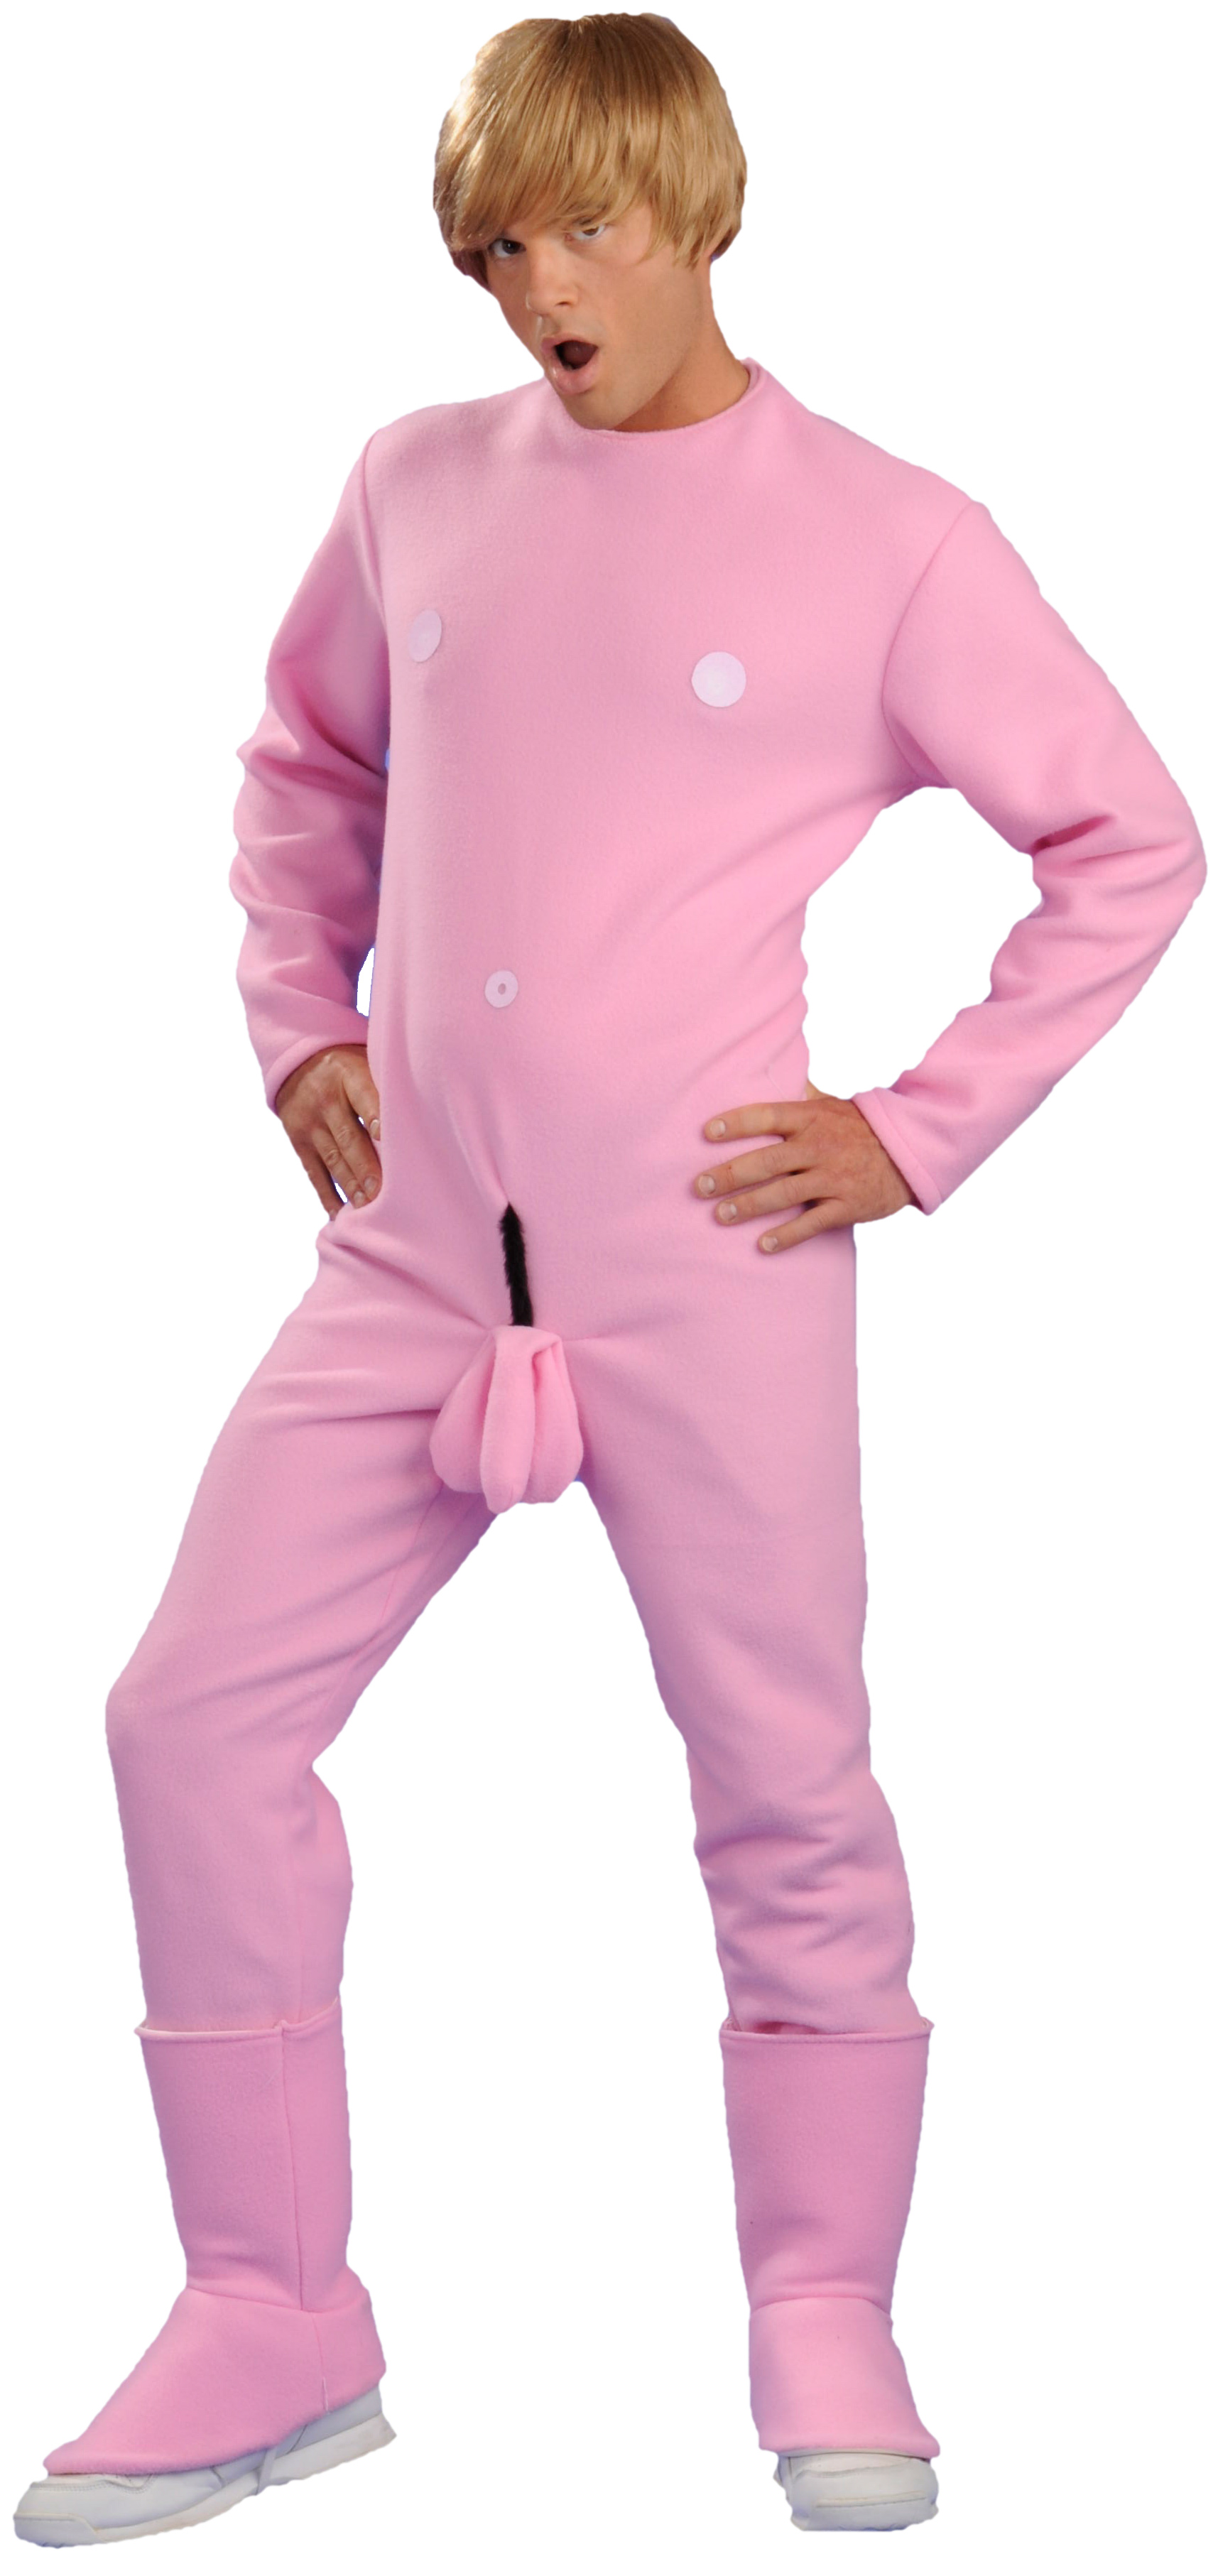 Rubie's Costume Co Men's Bruno 2009 - Pink Adult Costume - Standard